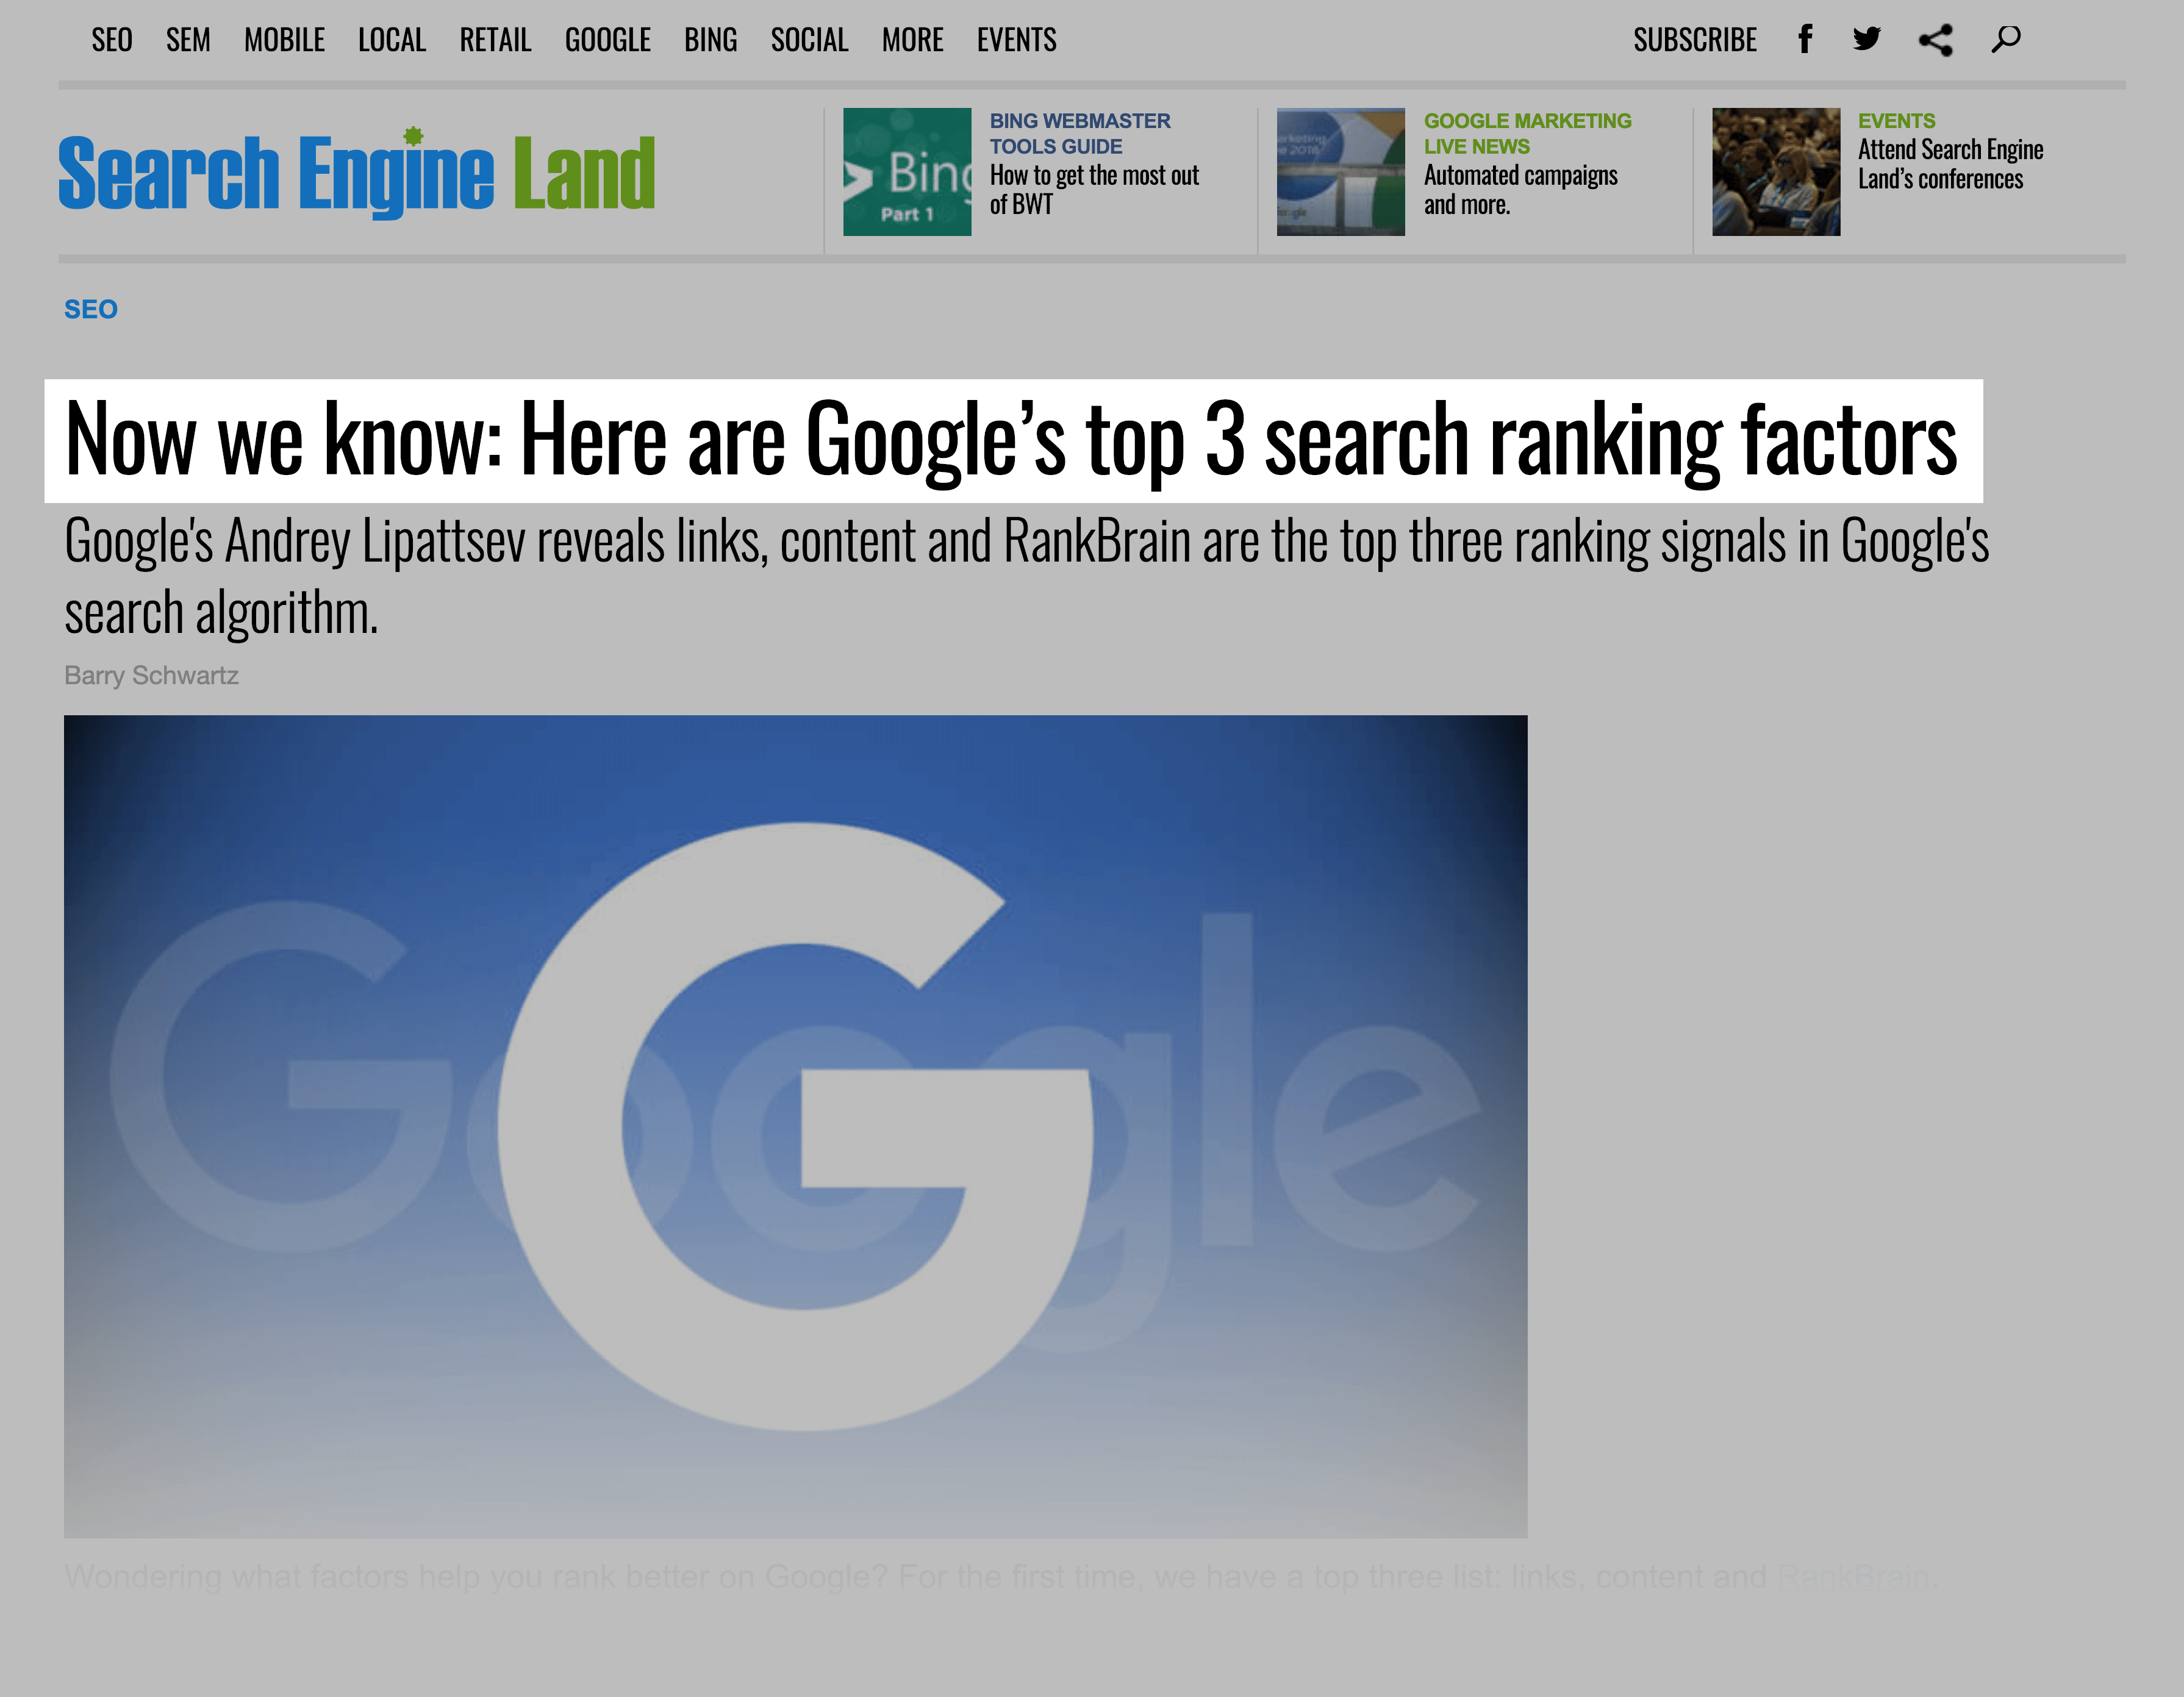 RankBrain is one of Google's top 3 ranking factors